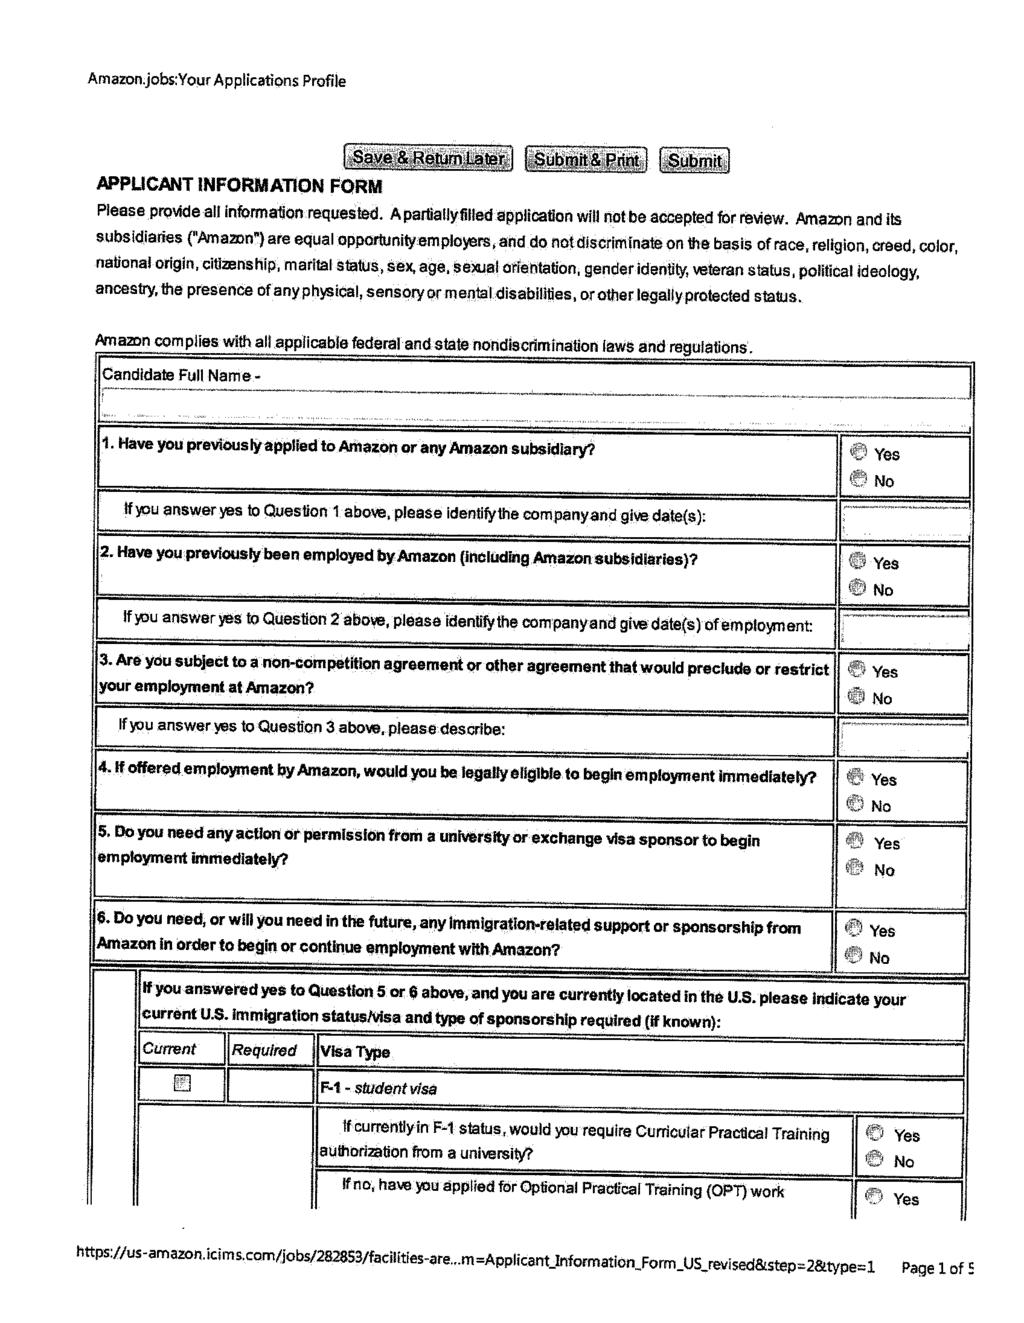 Case 8:15-cv-02456-RAL-AAS Document